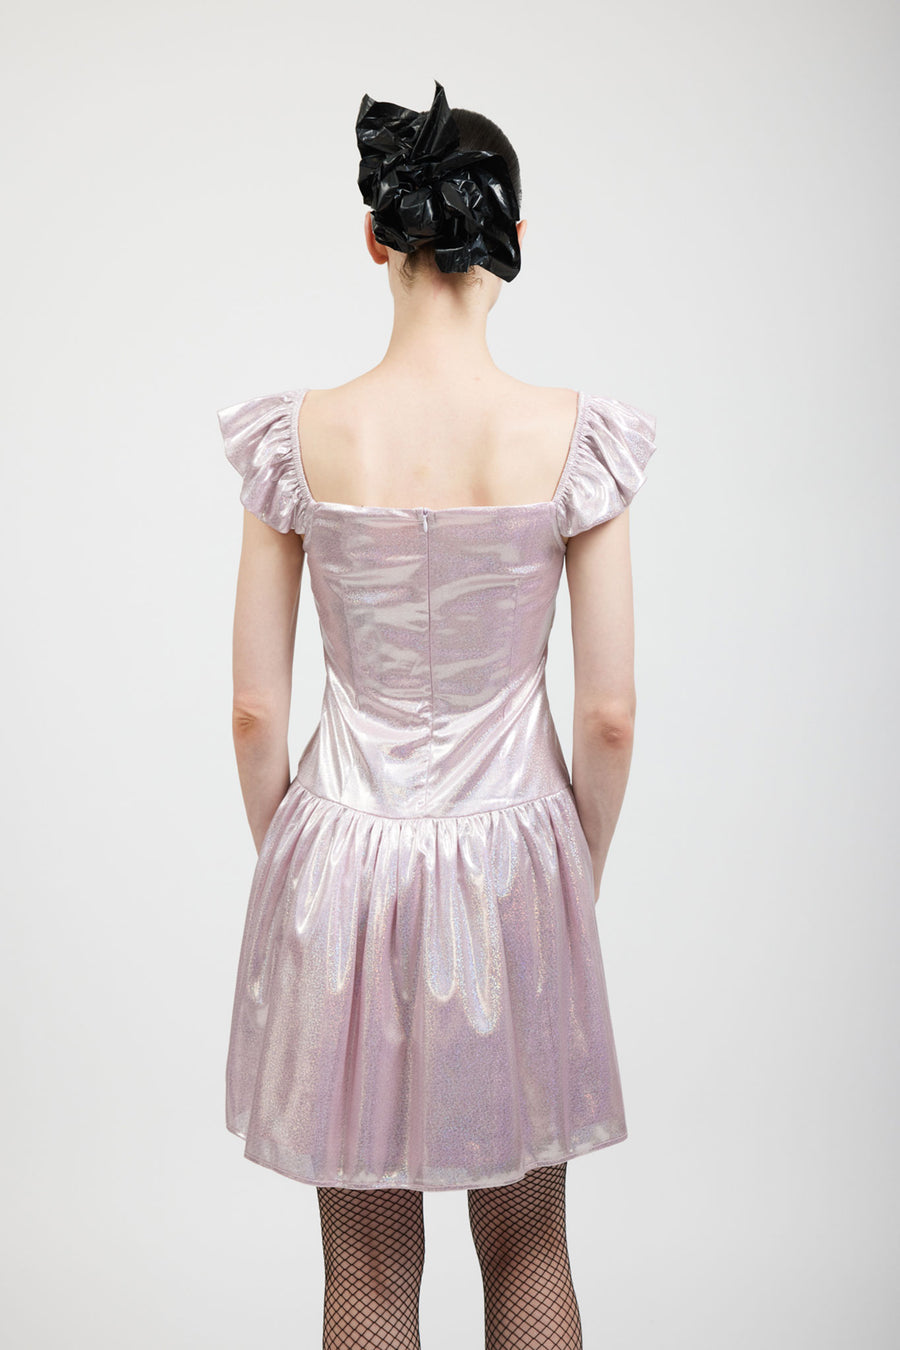 BATSHEVA - Wendy Dress in Pink Holographic